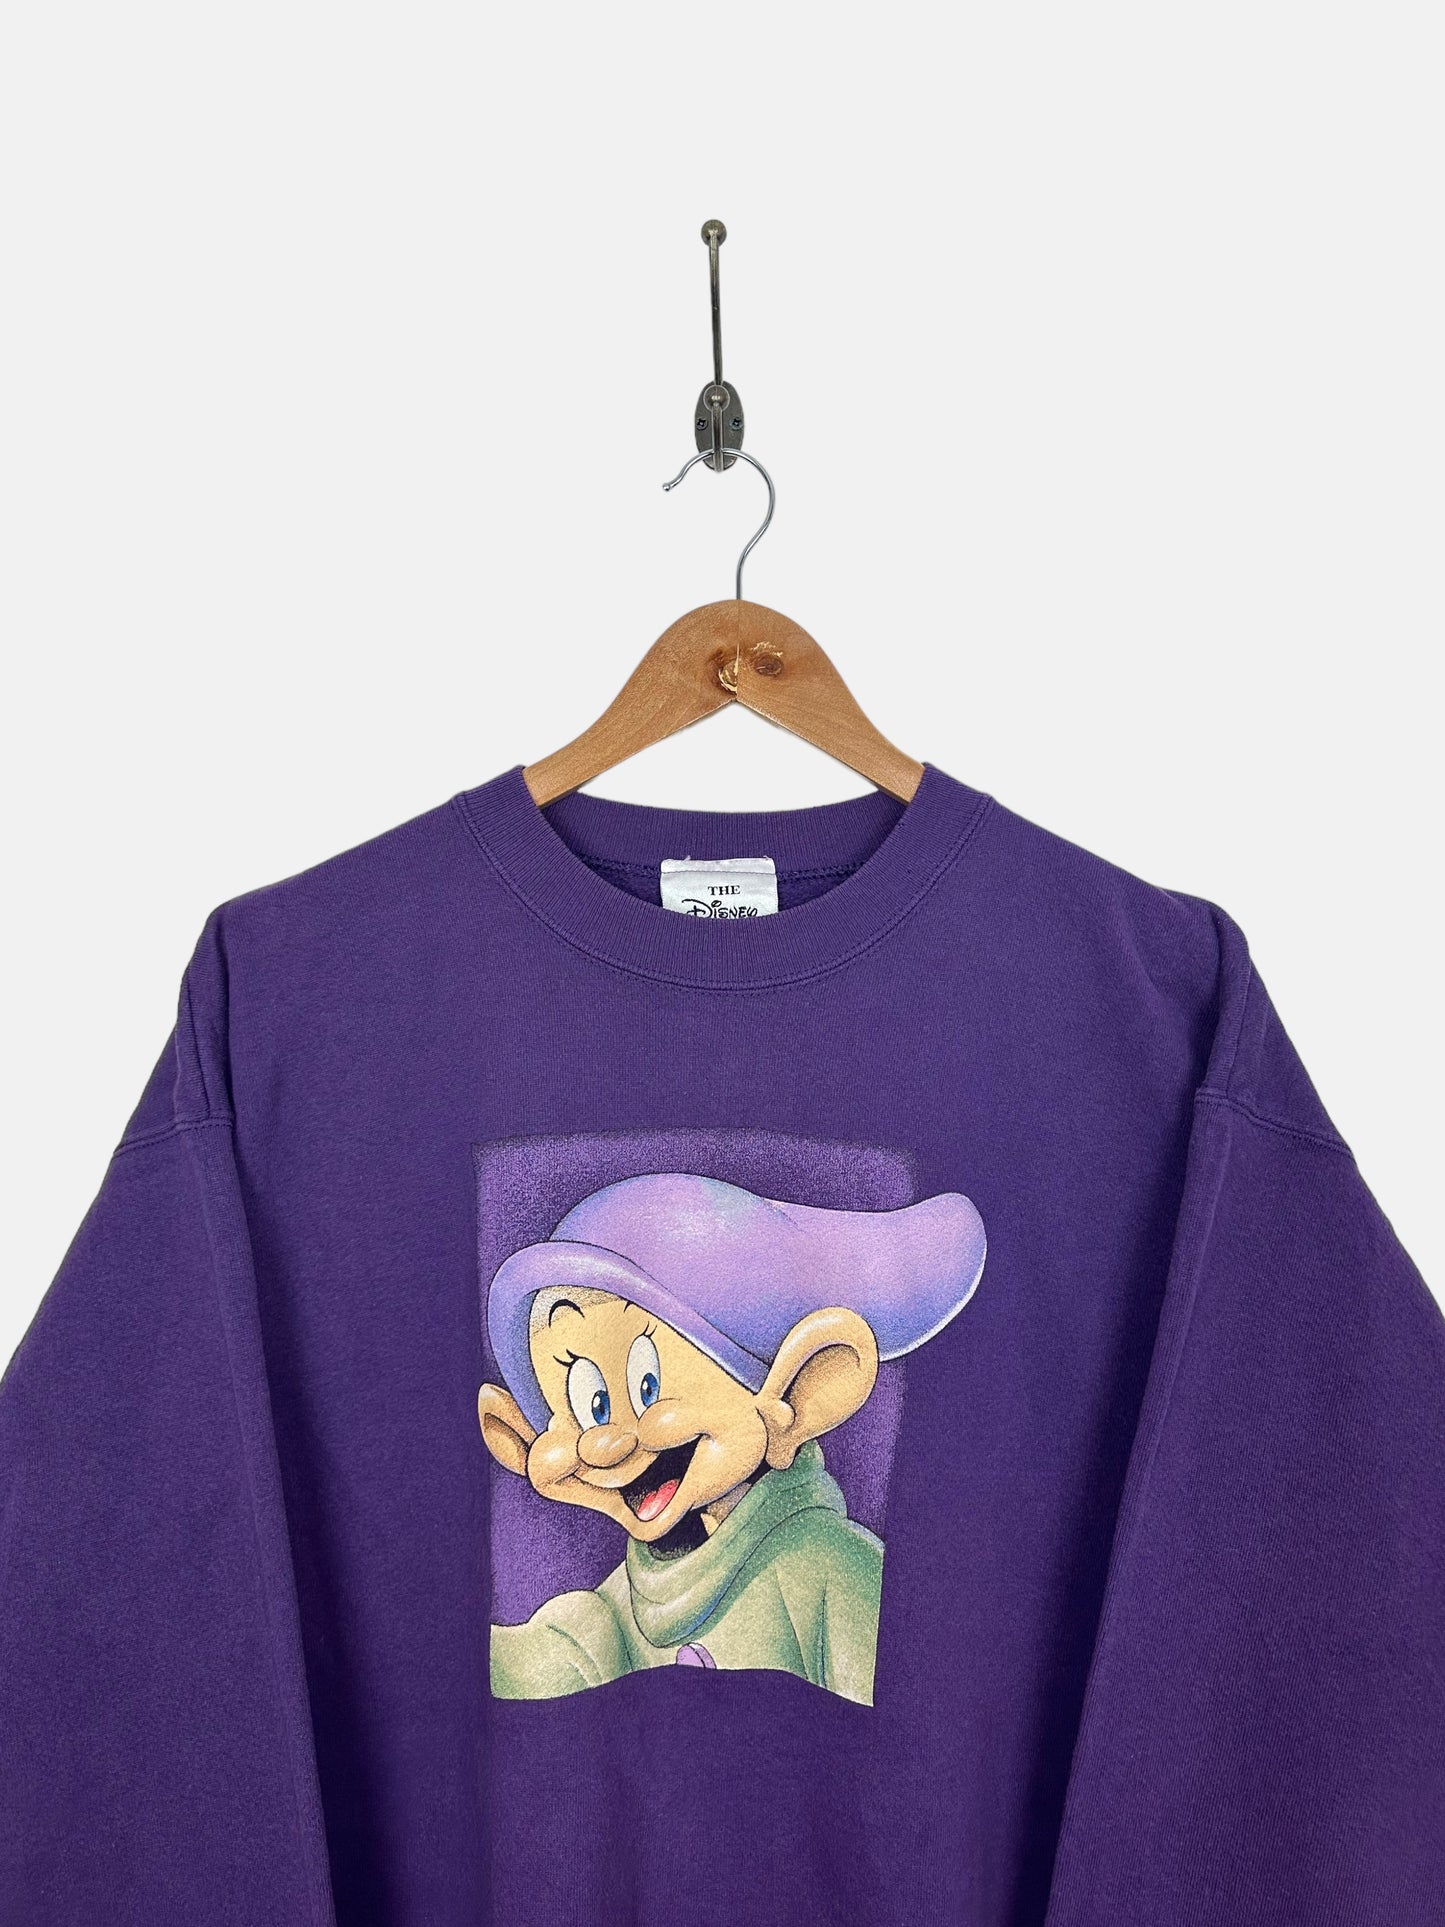 90's Disney Dopey USA Made Vintage Sweatshirt M